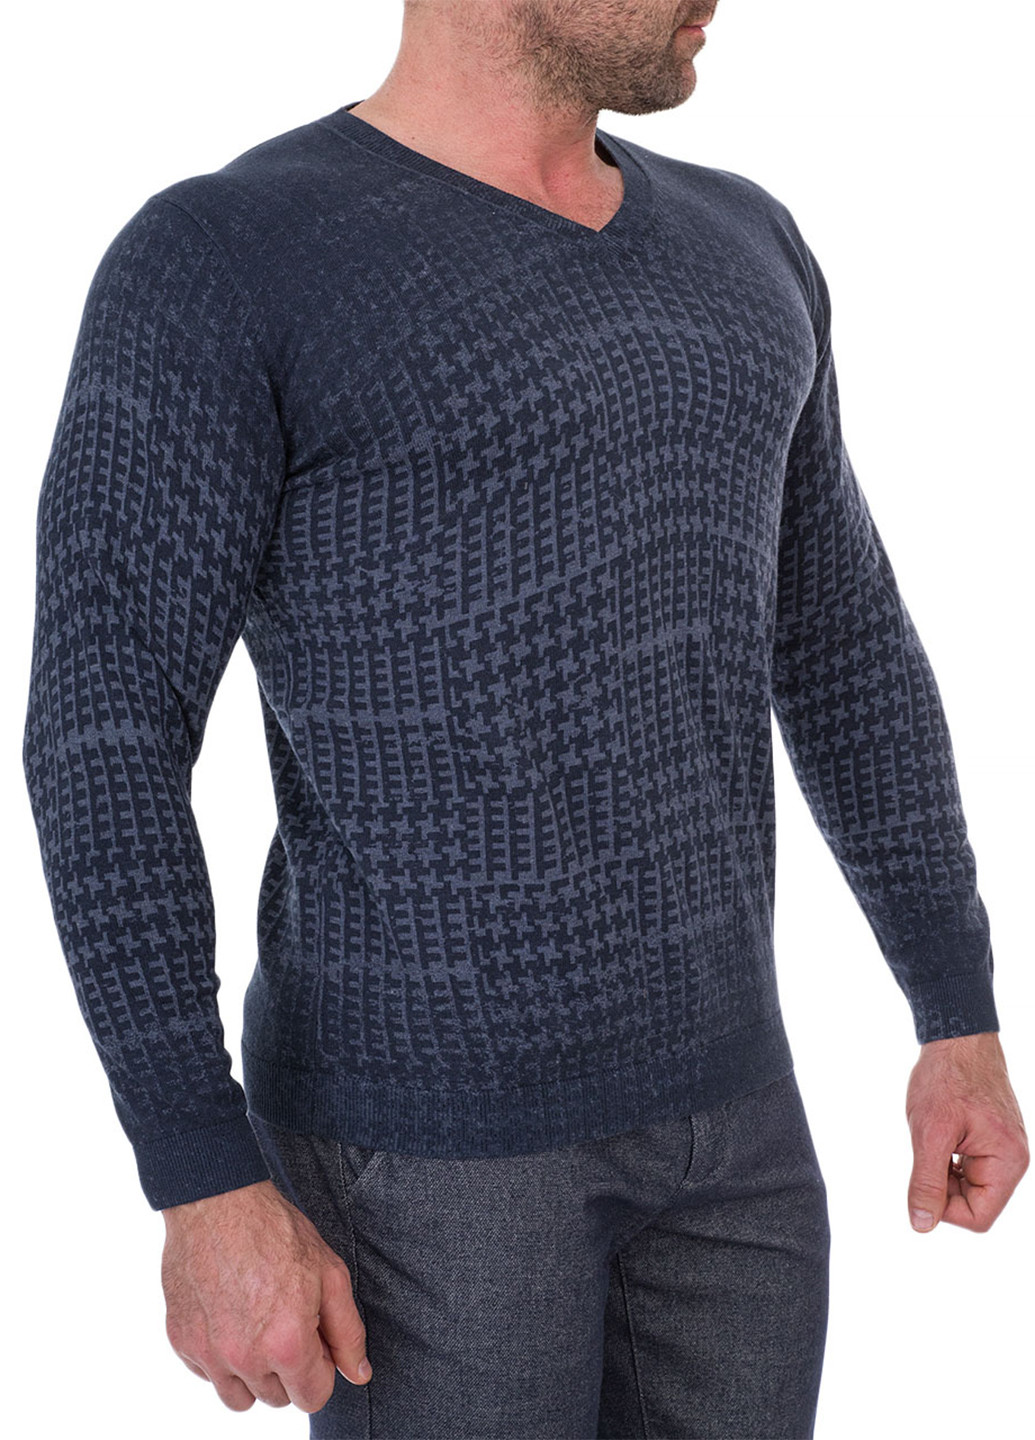 Темно-синий демисезонный пуловер пуловер Kitaro